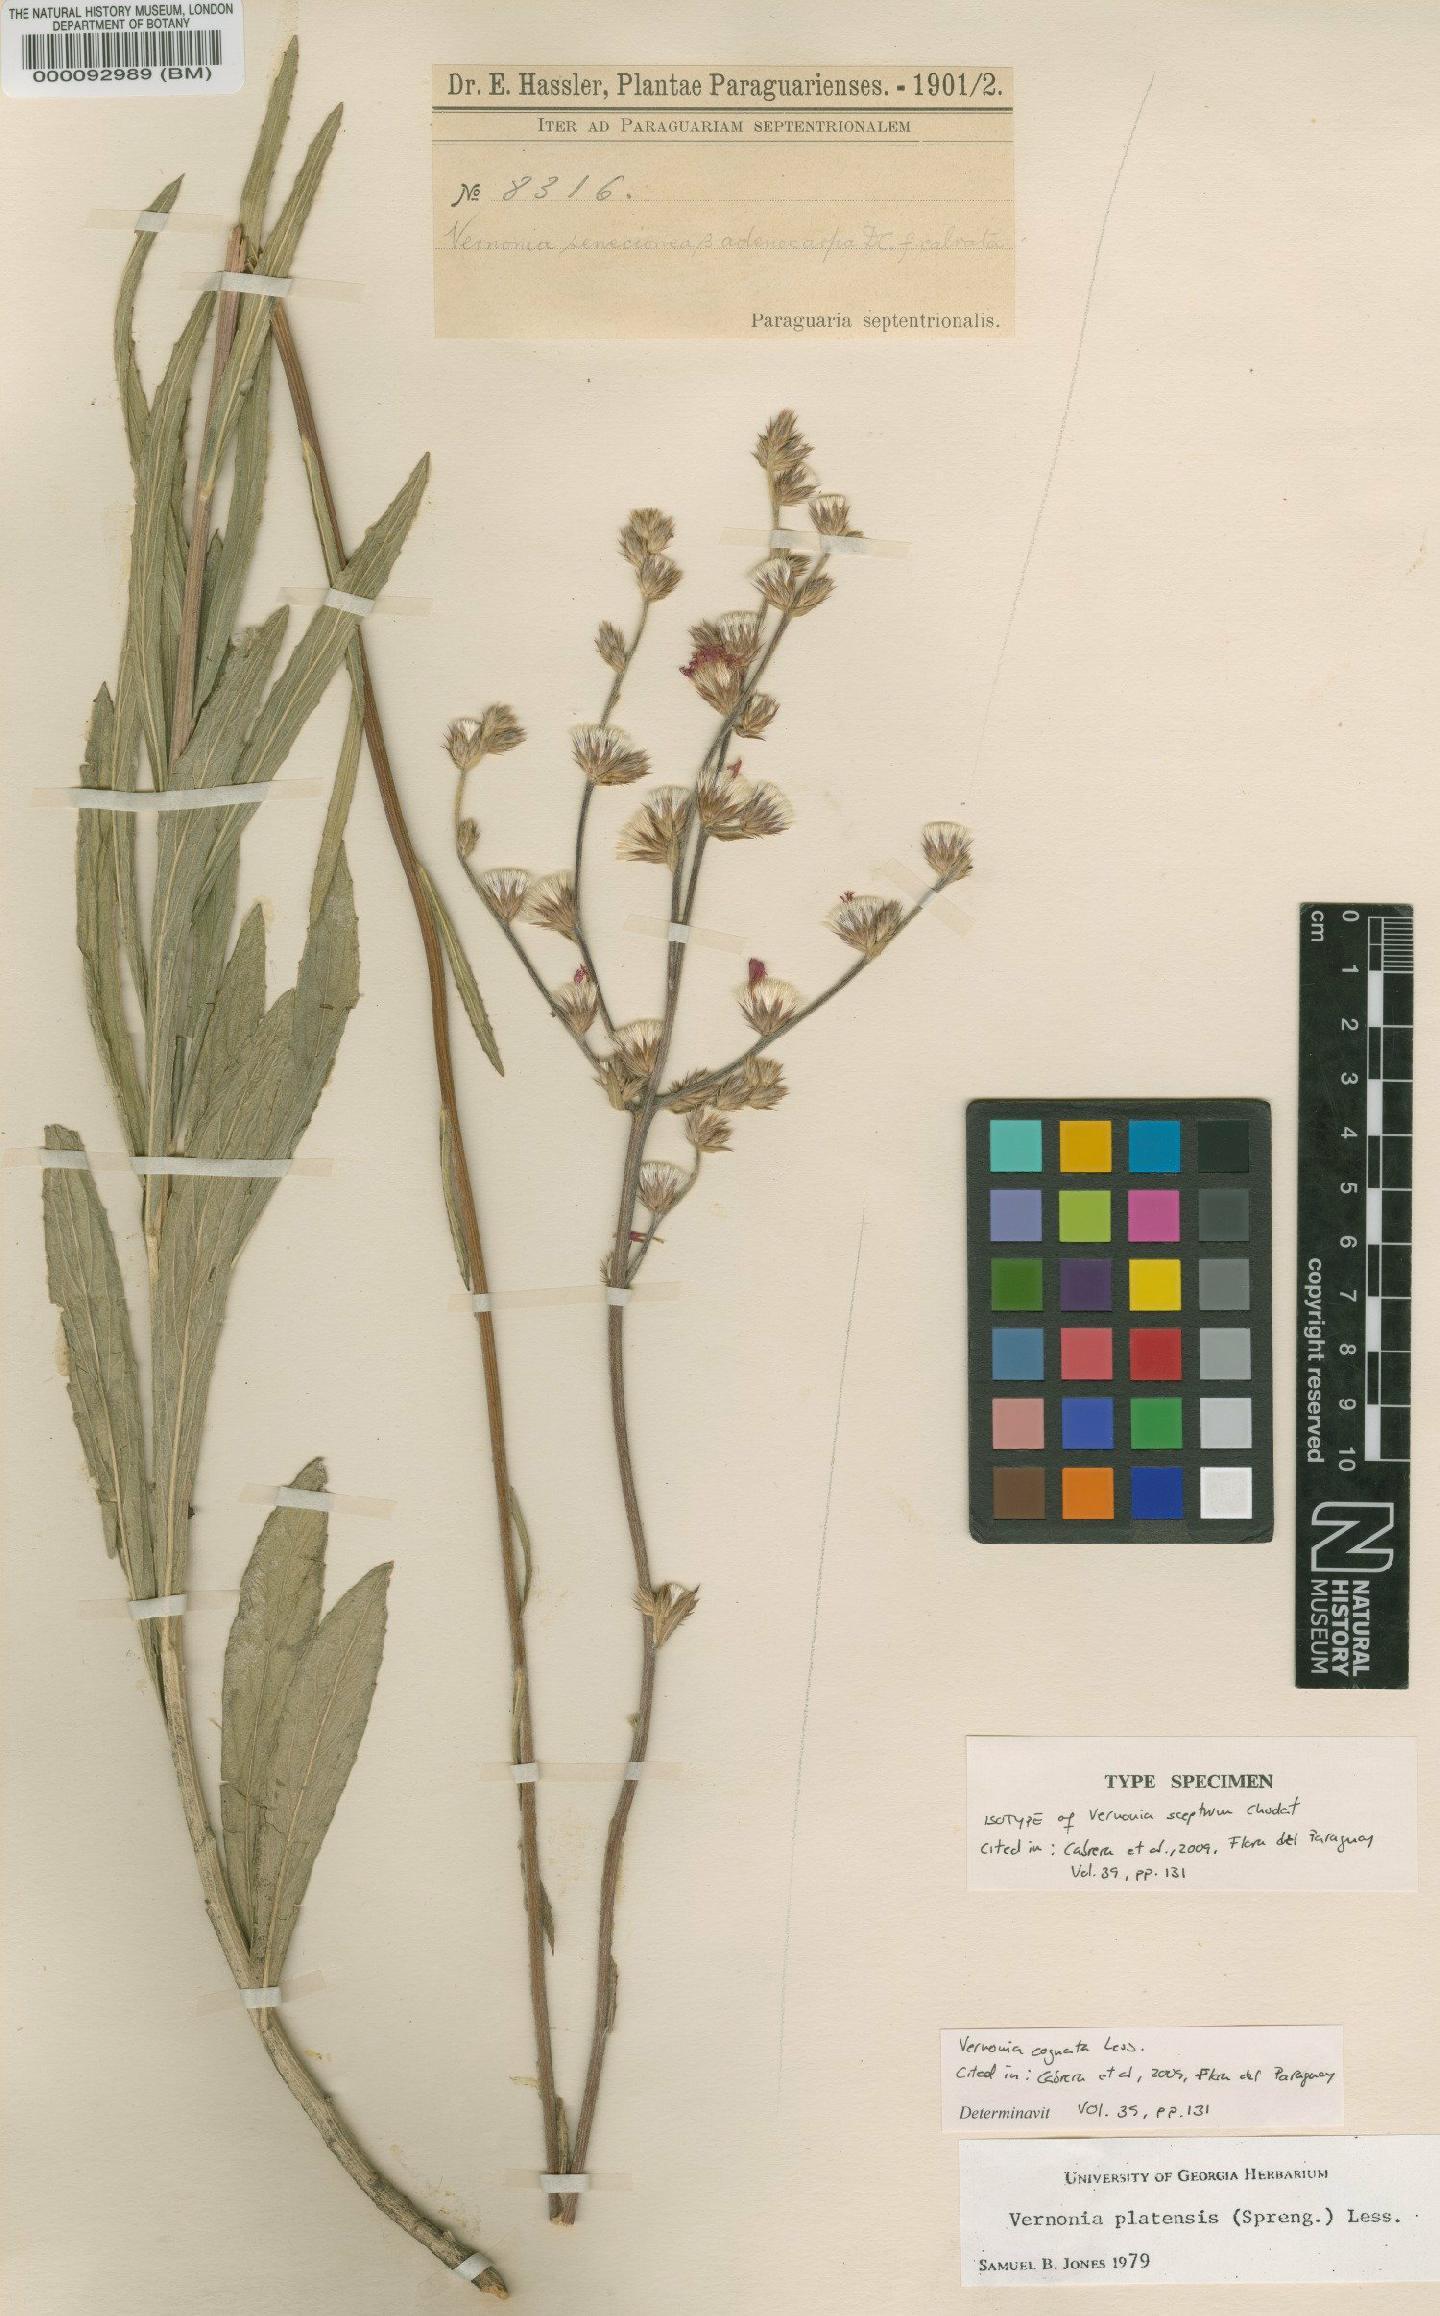 To NHMUK collection (Vernonia platensis (Spreng.) Less; Isotype; NHMUK:ecatalogue:4567582)